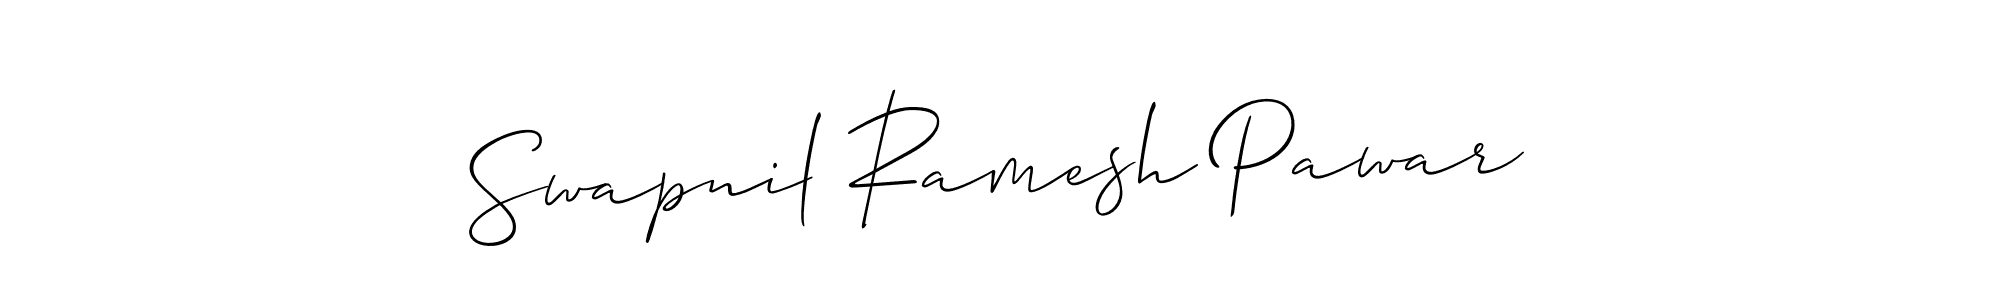 How to Draw Swapnil Ramesh Pawar signature style? Allison_Script is a latest design signature styles for name Swapnil Ramesh Pawar. Swapnil Ramesh Pawar signature style 2 images and pictures png